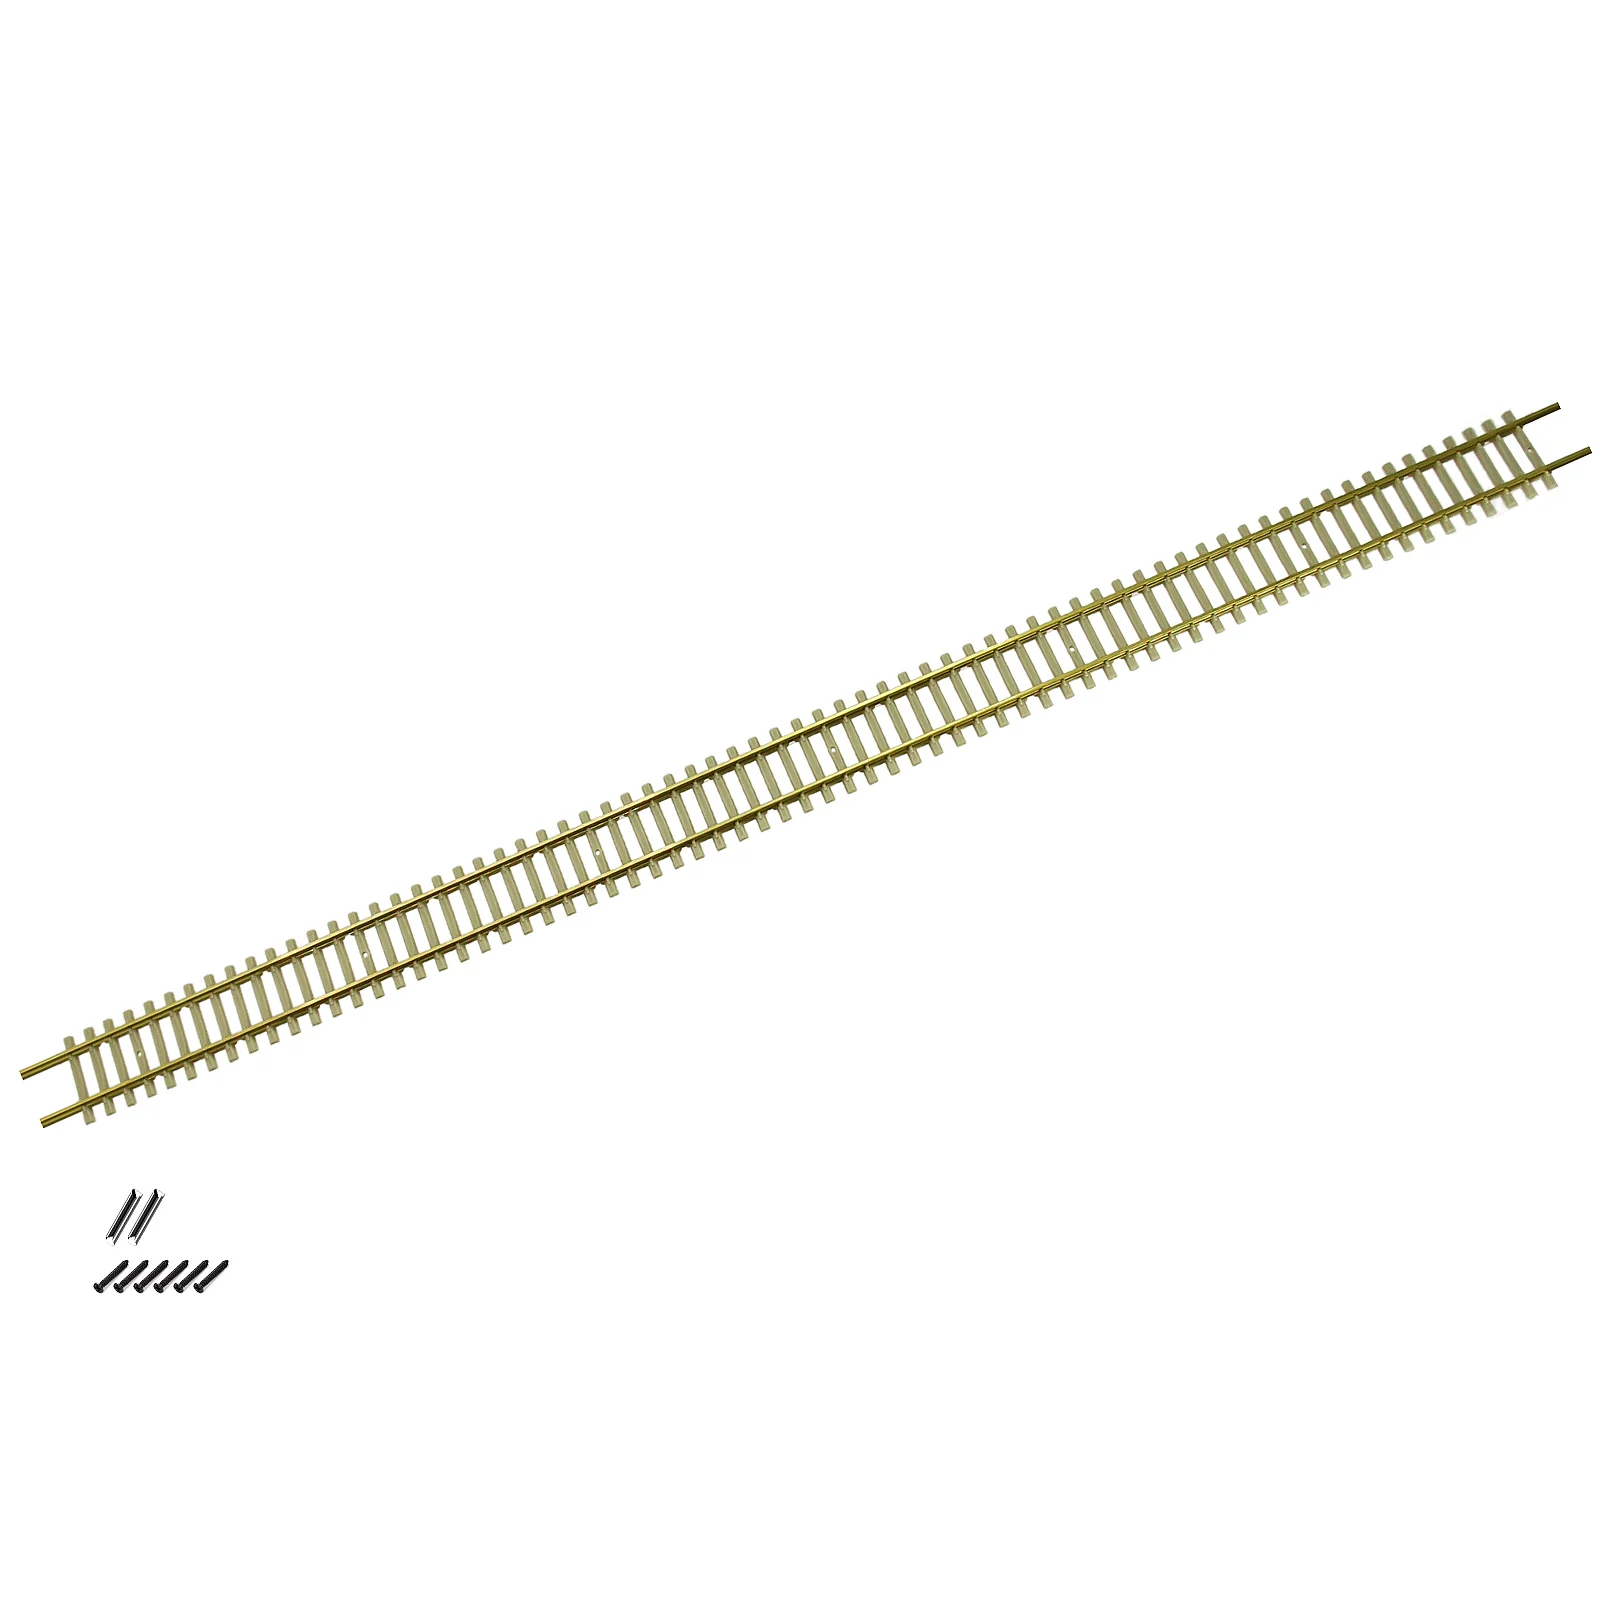 

HP27HO Model Train Railway HO Scale 1:87 Tracks Flexible Rail 46cm with Rail Joiners Screws